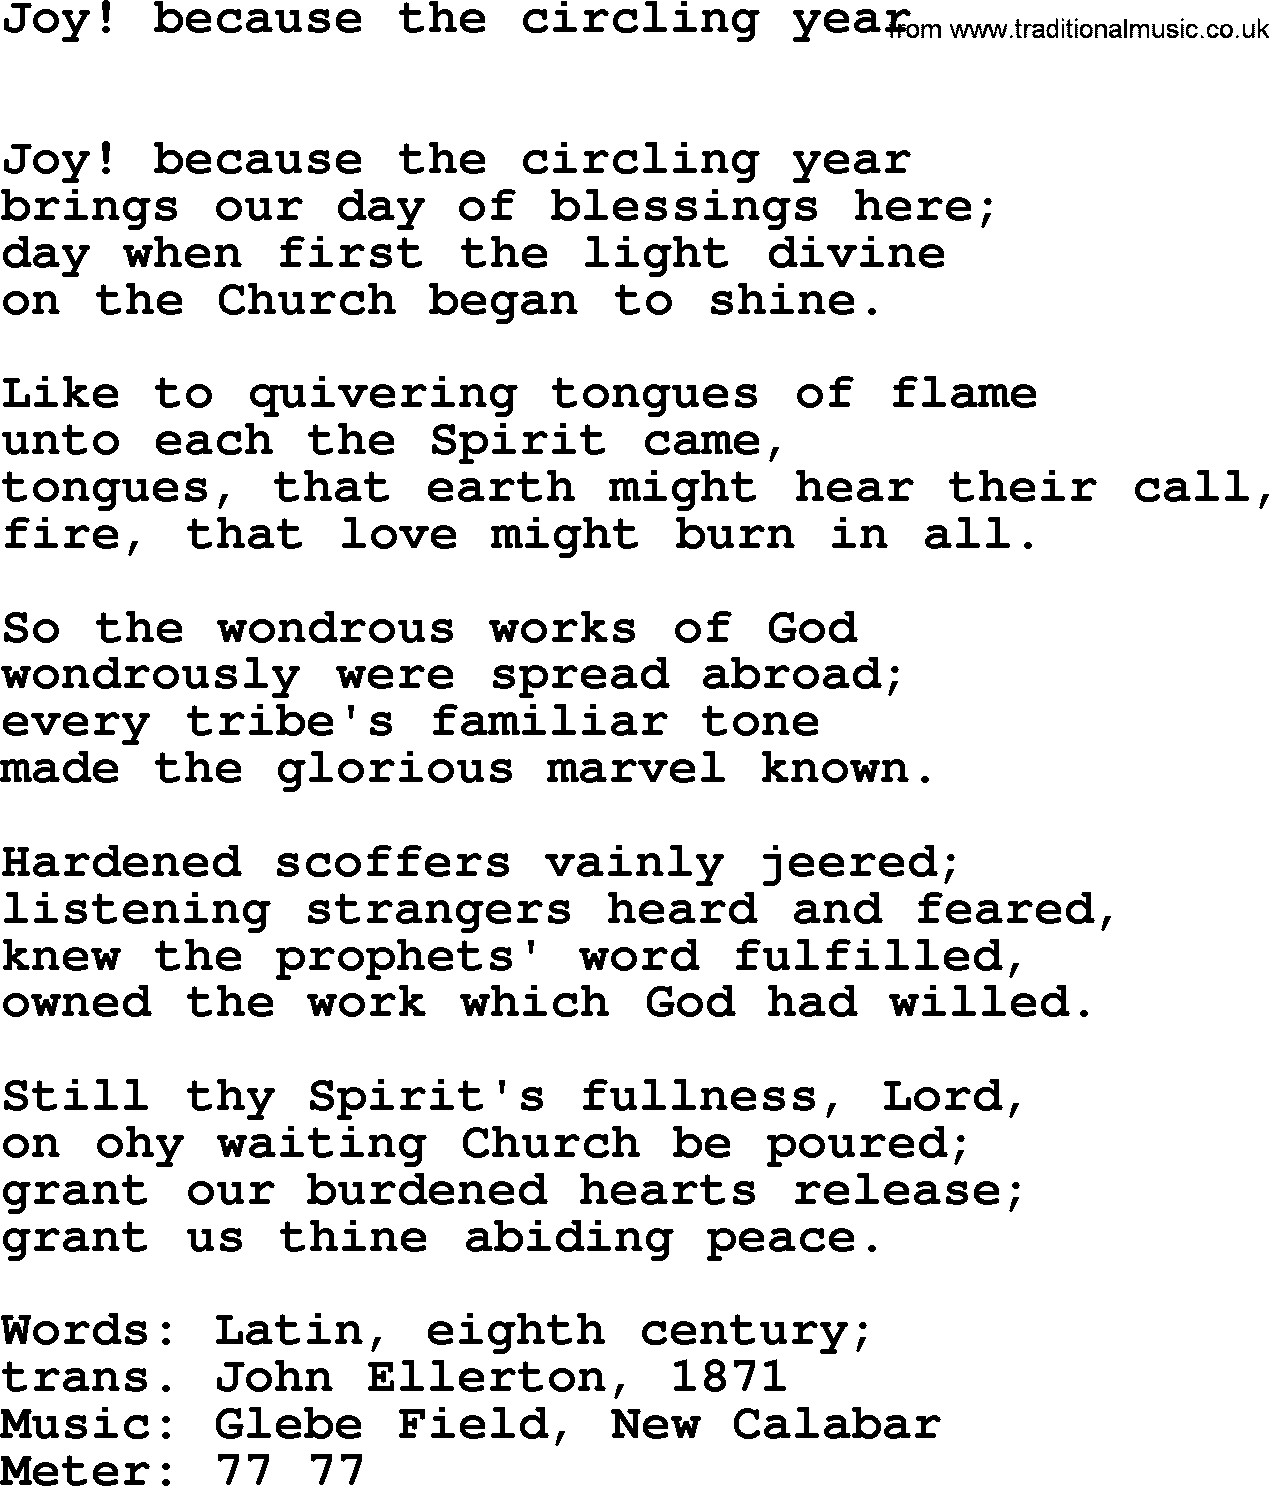 Book of Common Praise Hymn: Joy! Because The Circling Year.txt lyrics with midi music